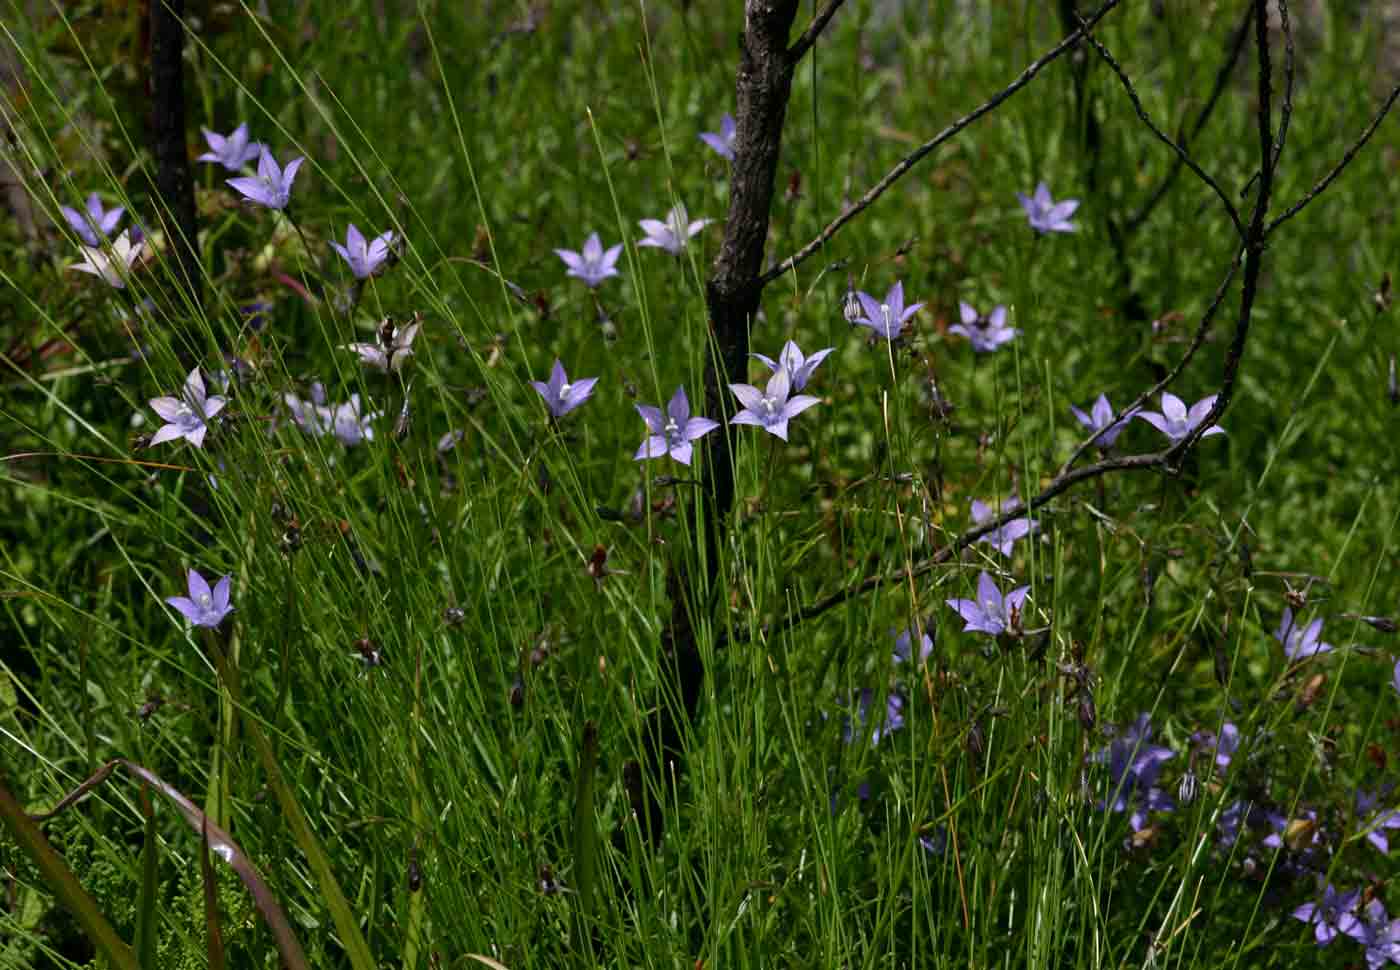 Wahlenbergia undulata